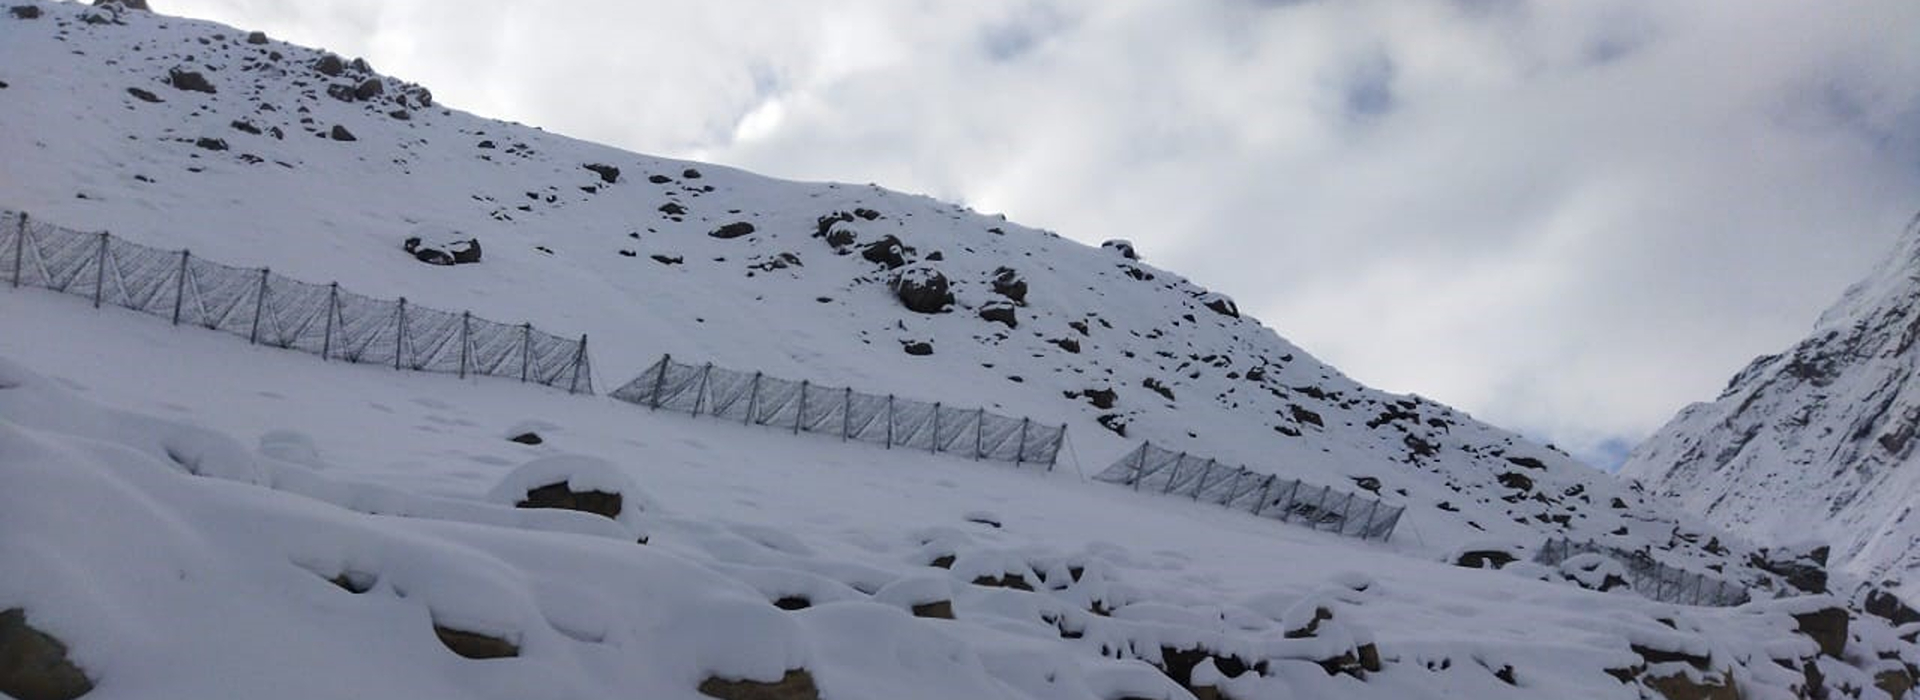 Avalanch Barrier